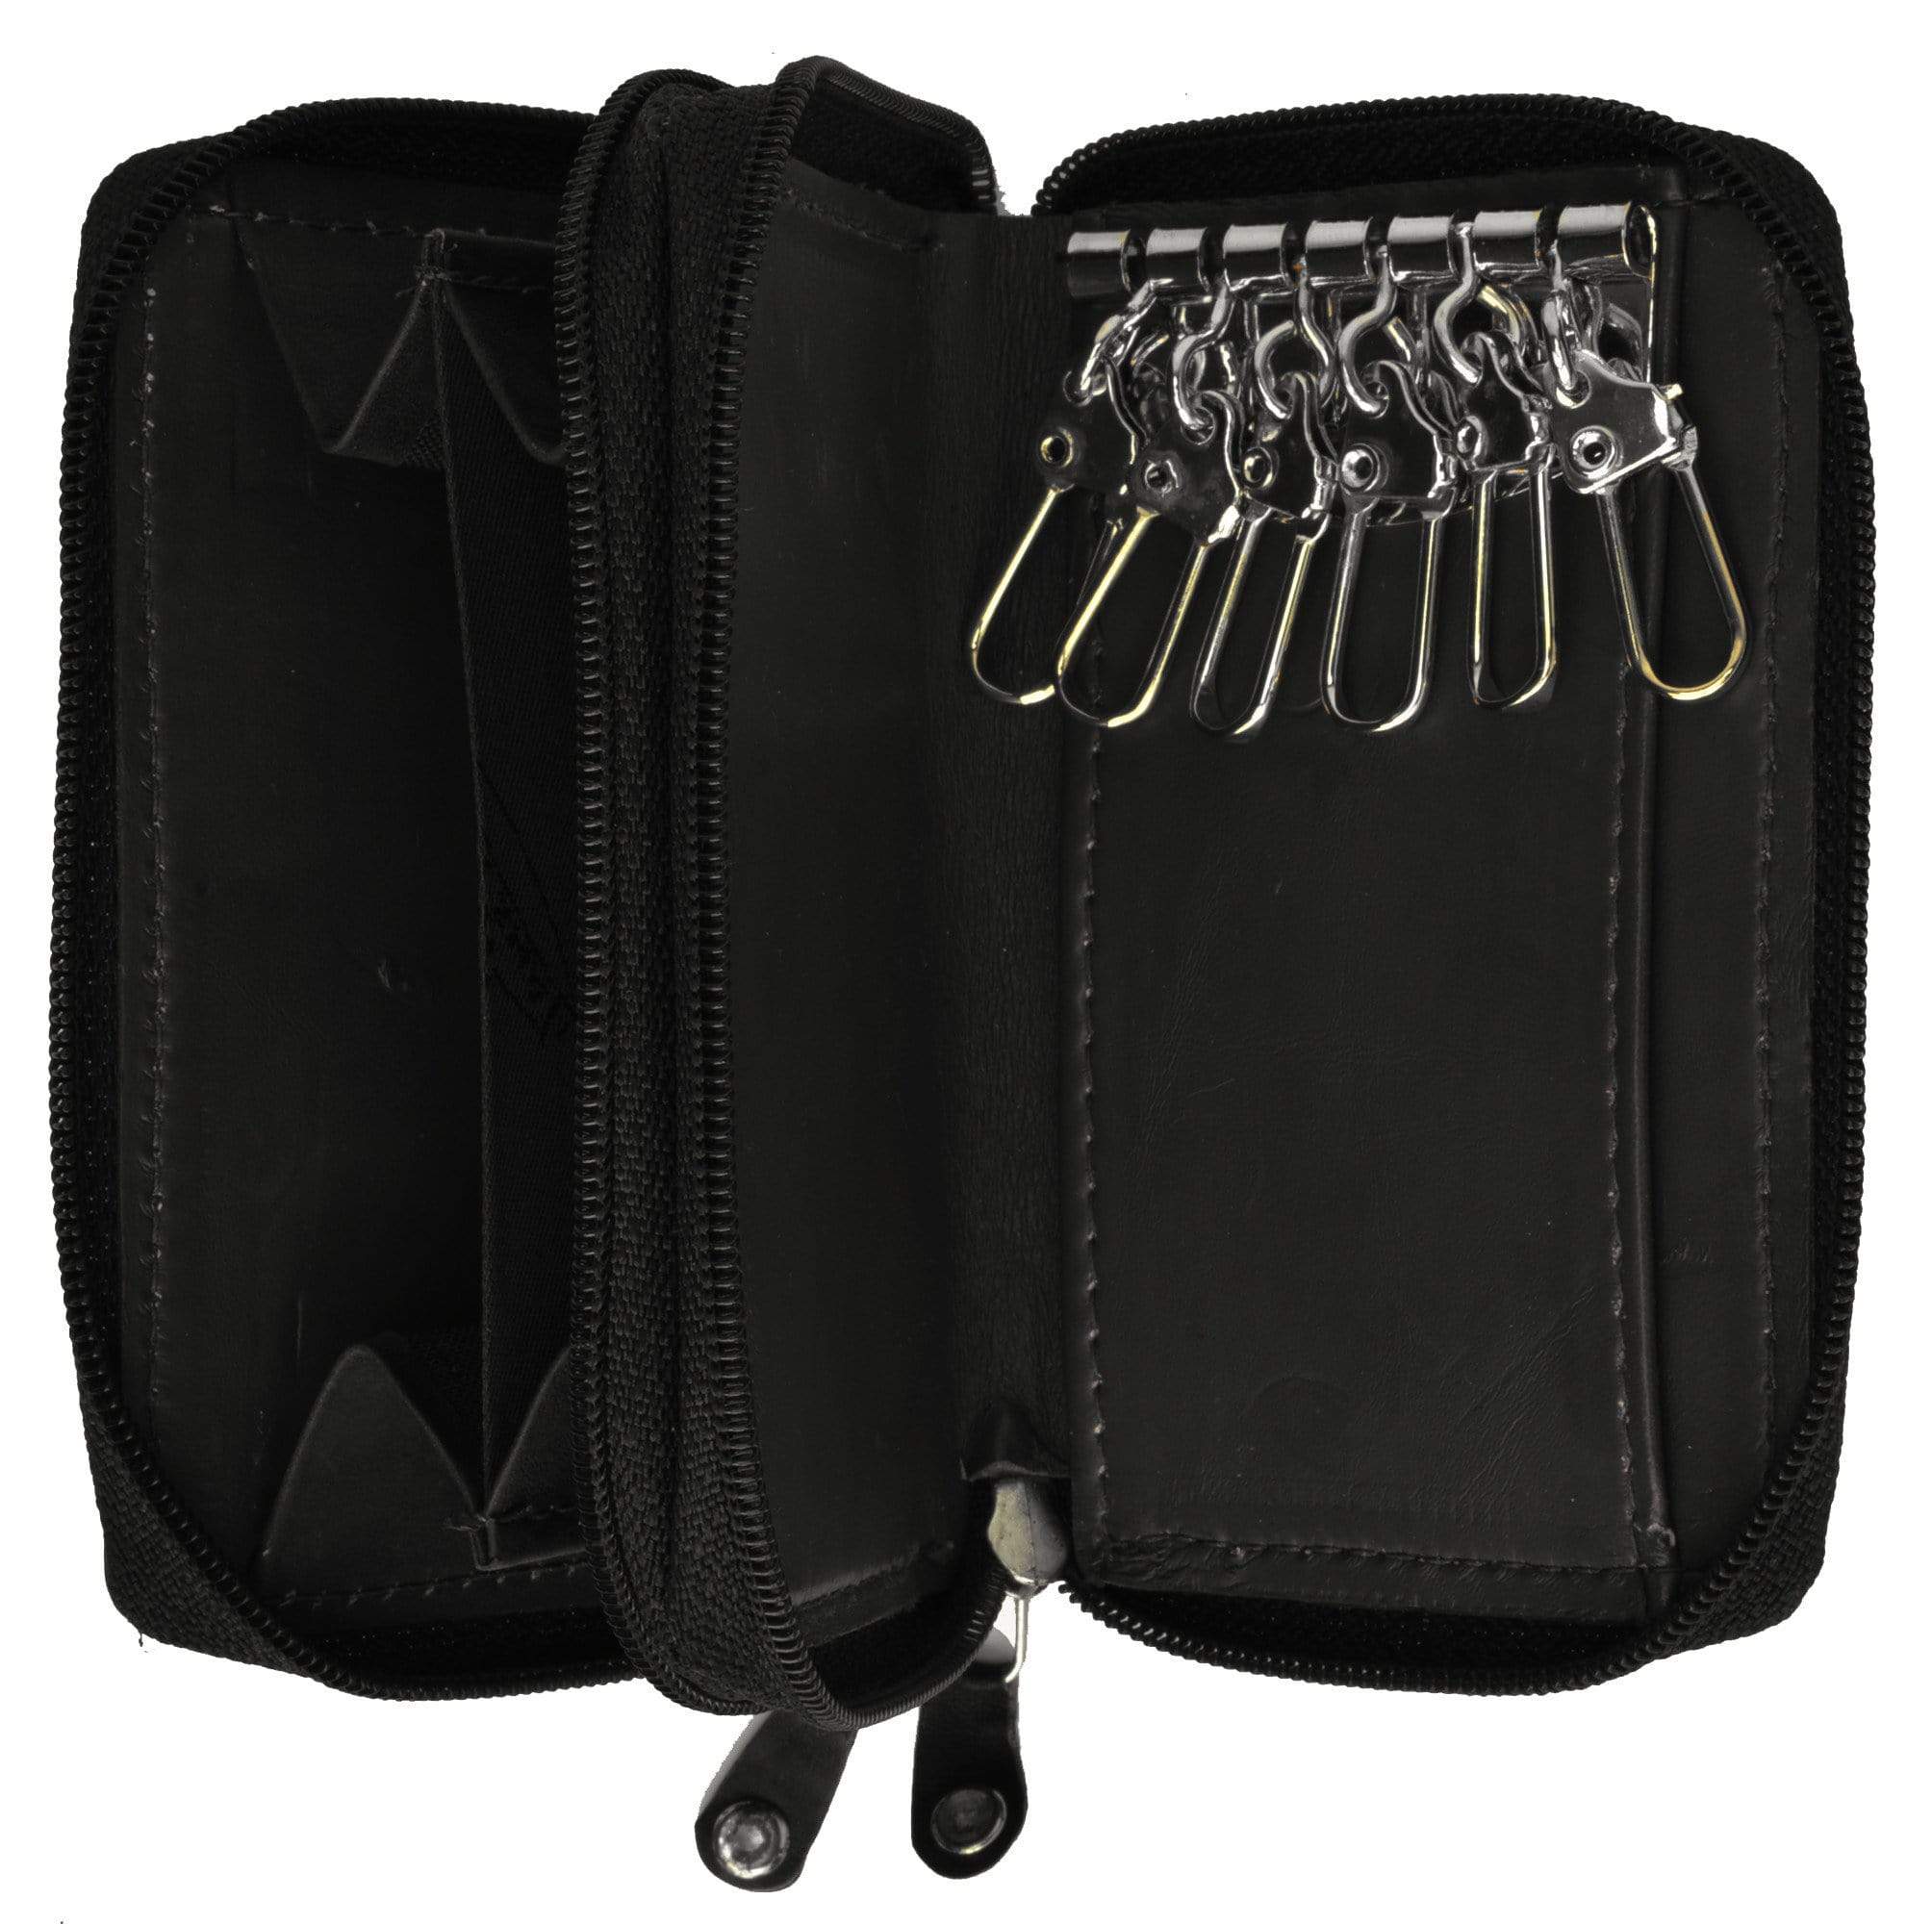  Genuine Leather Zipper Key Chain,Key Holder Bag